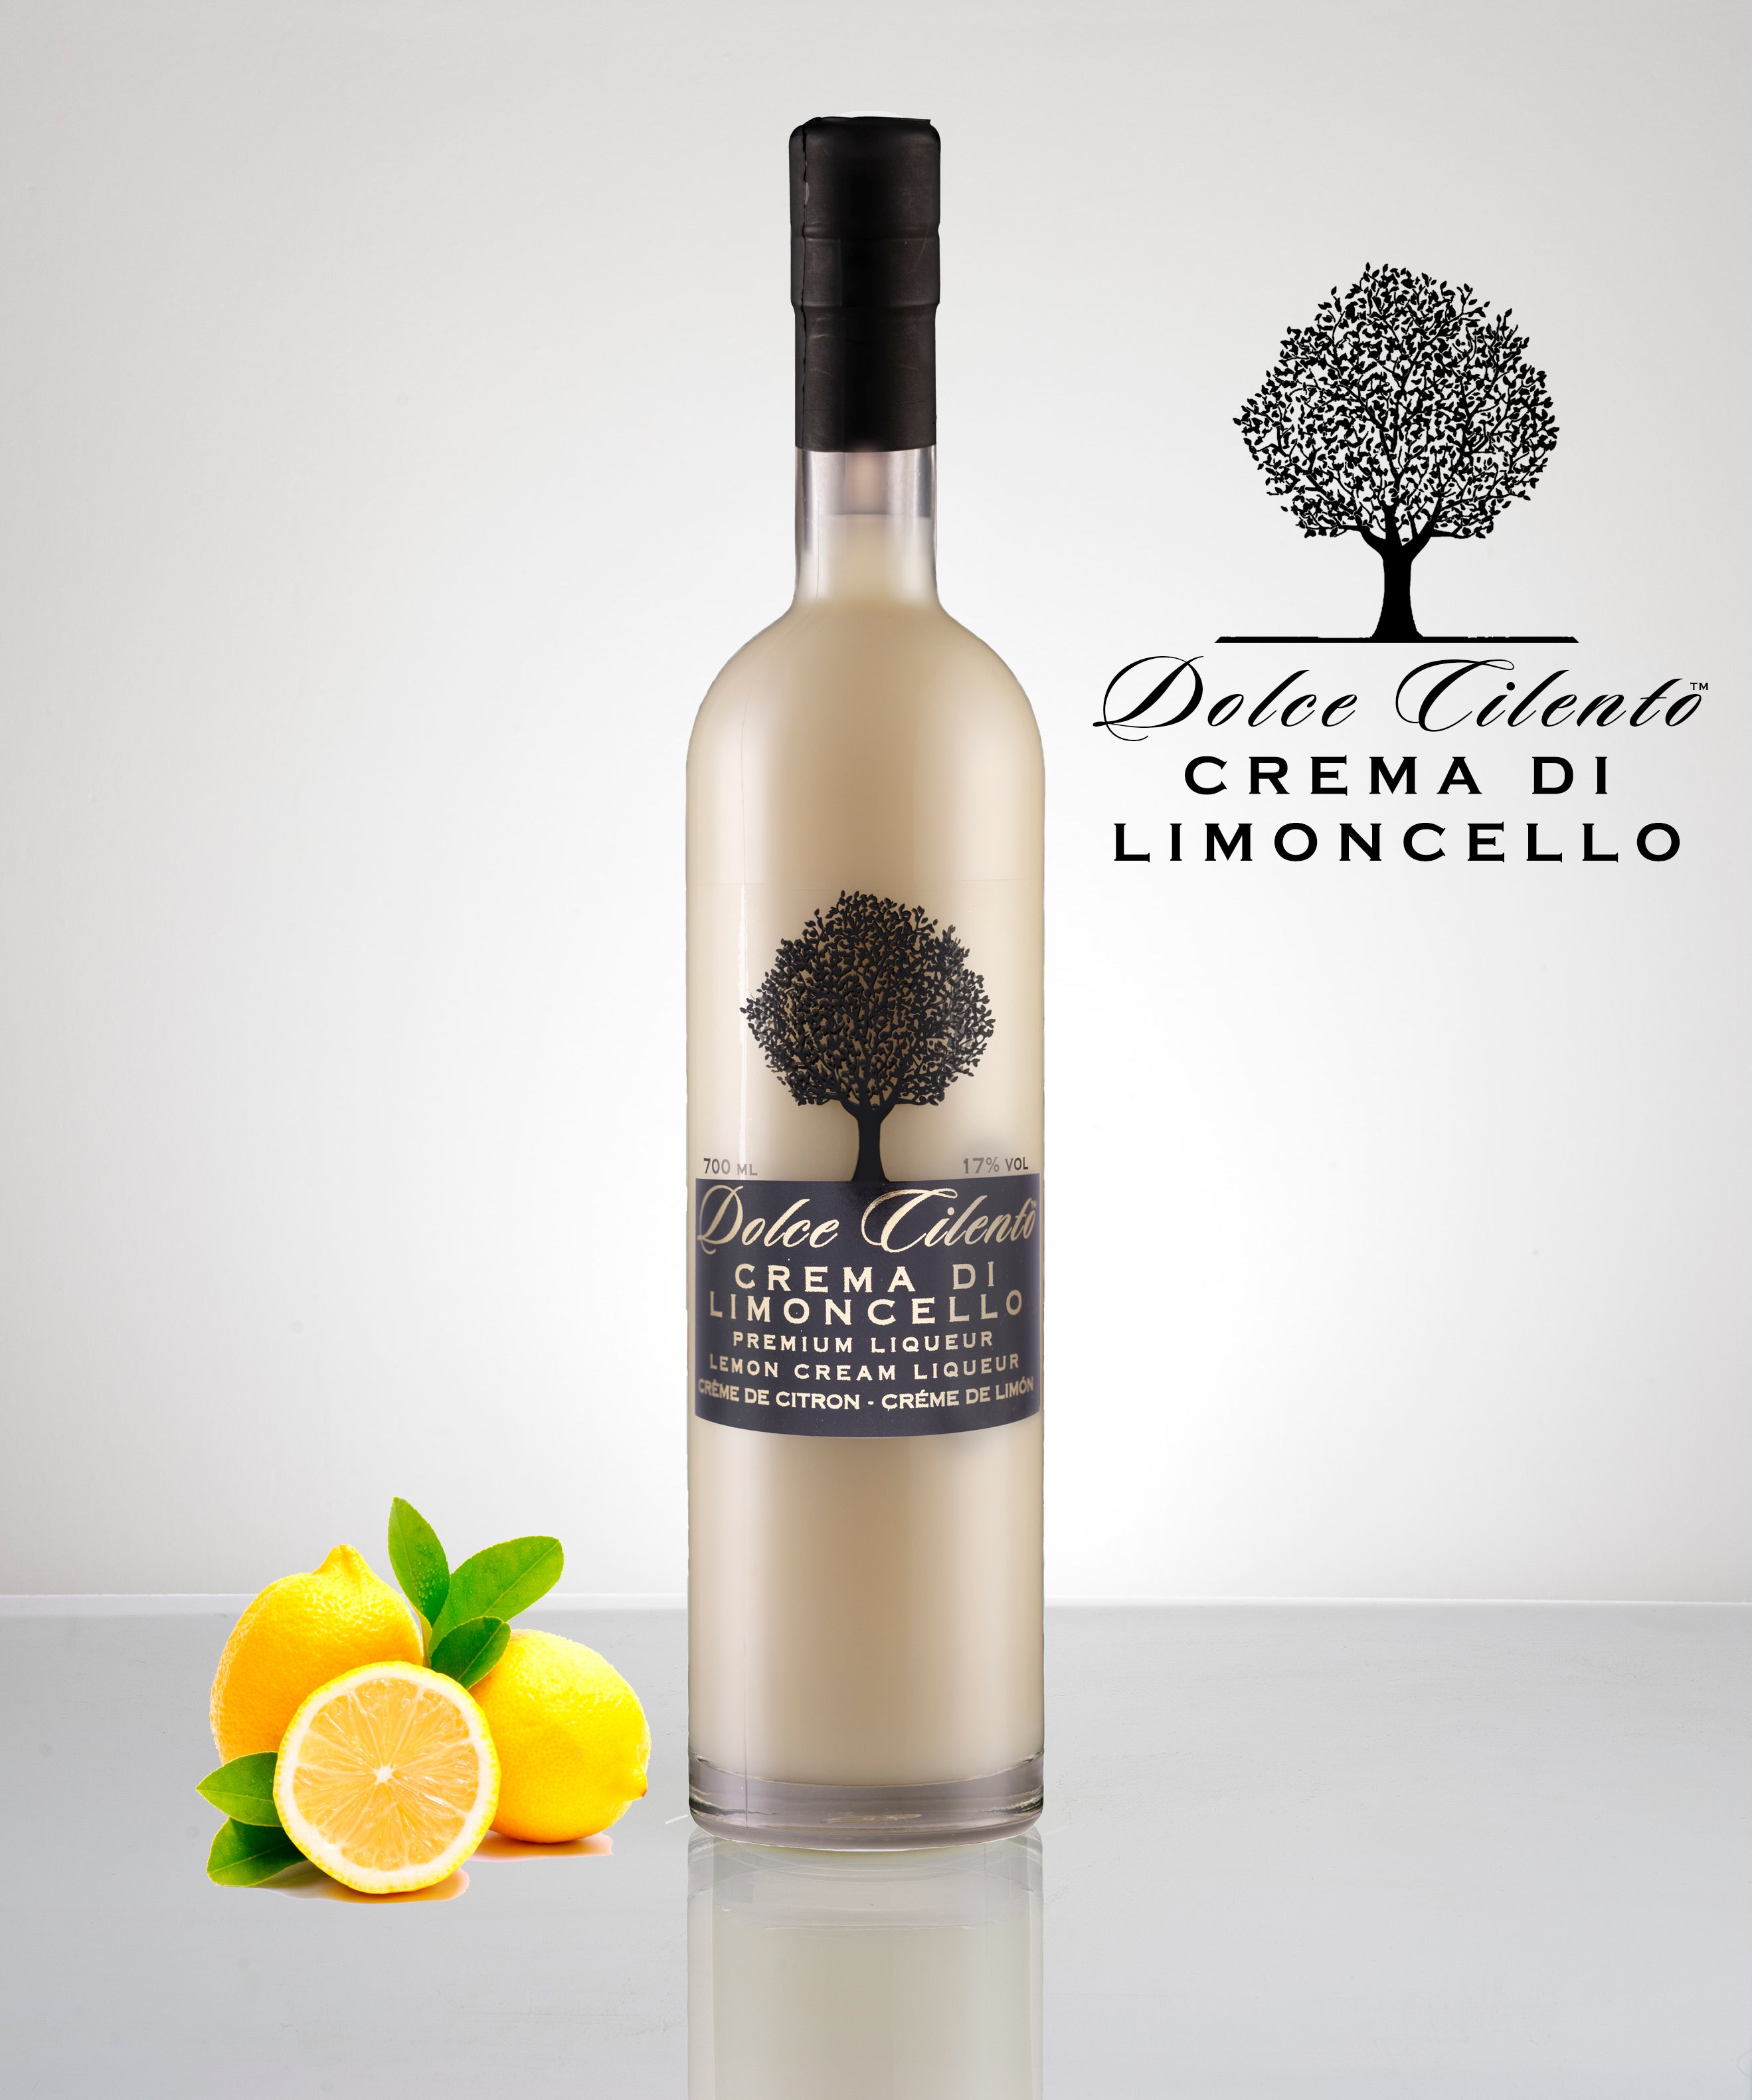 Launching a new Crema di Limoncello by Dolce Cilento